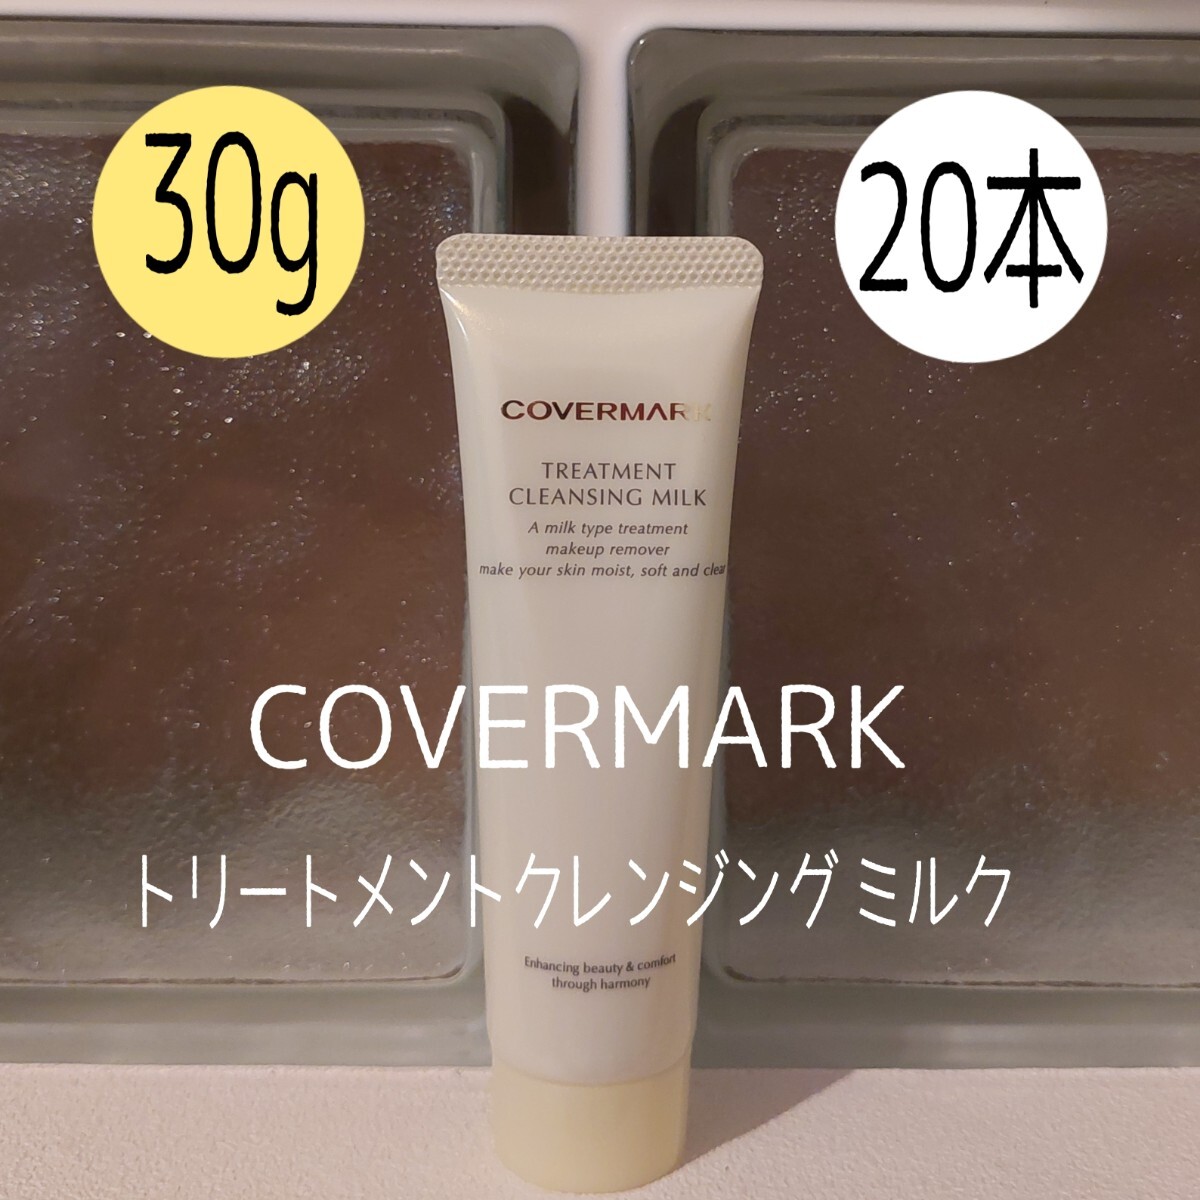  Covermark *30g×20 шт. комплект * уход очищающее молочко *COVERMARK*VOCE дополнение *